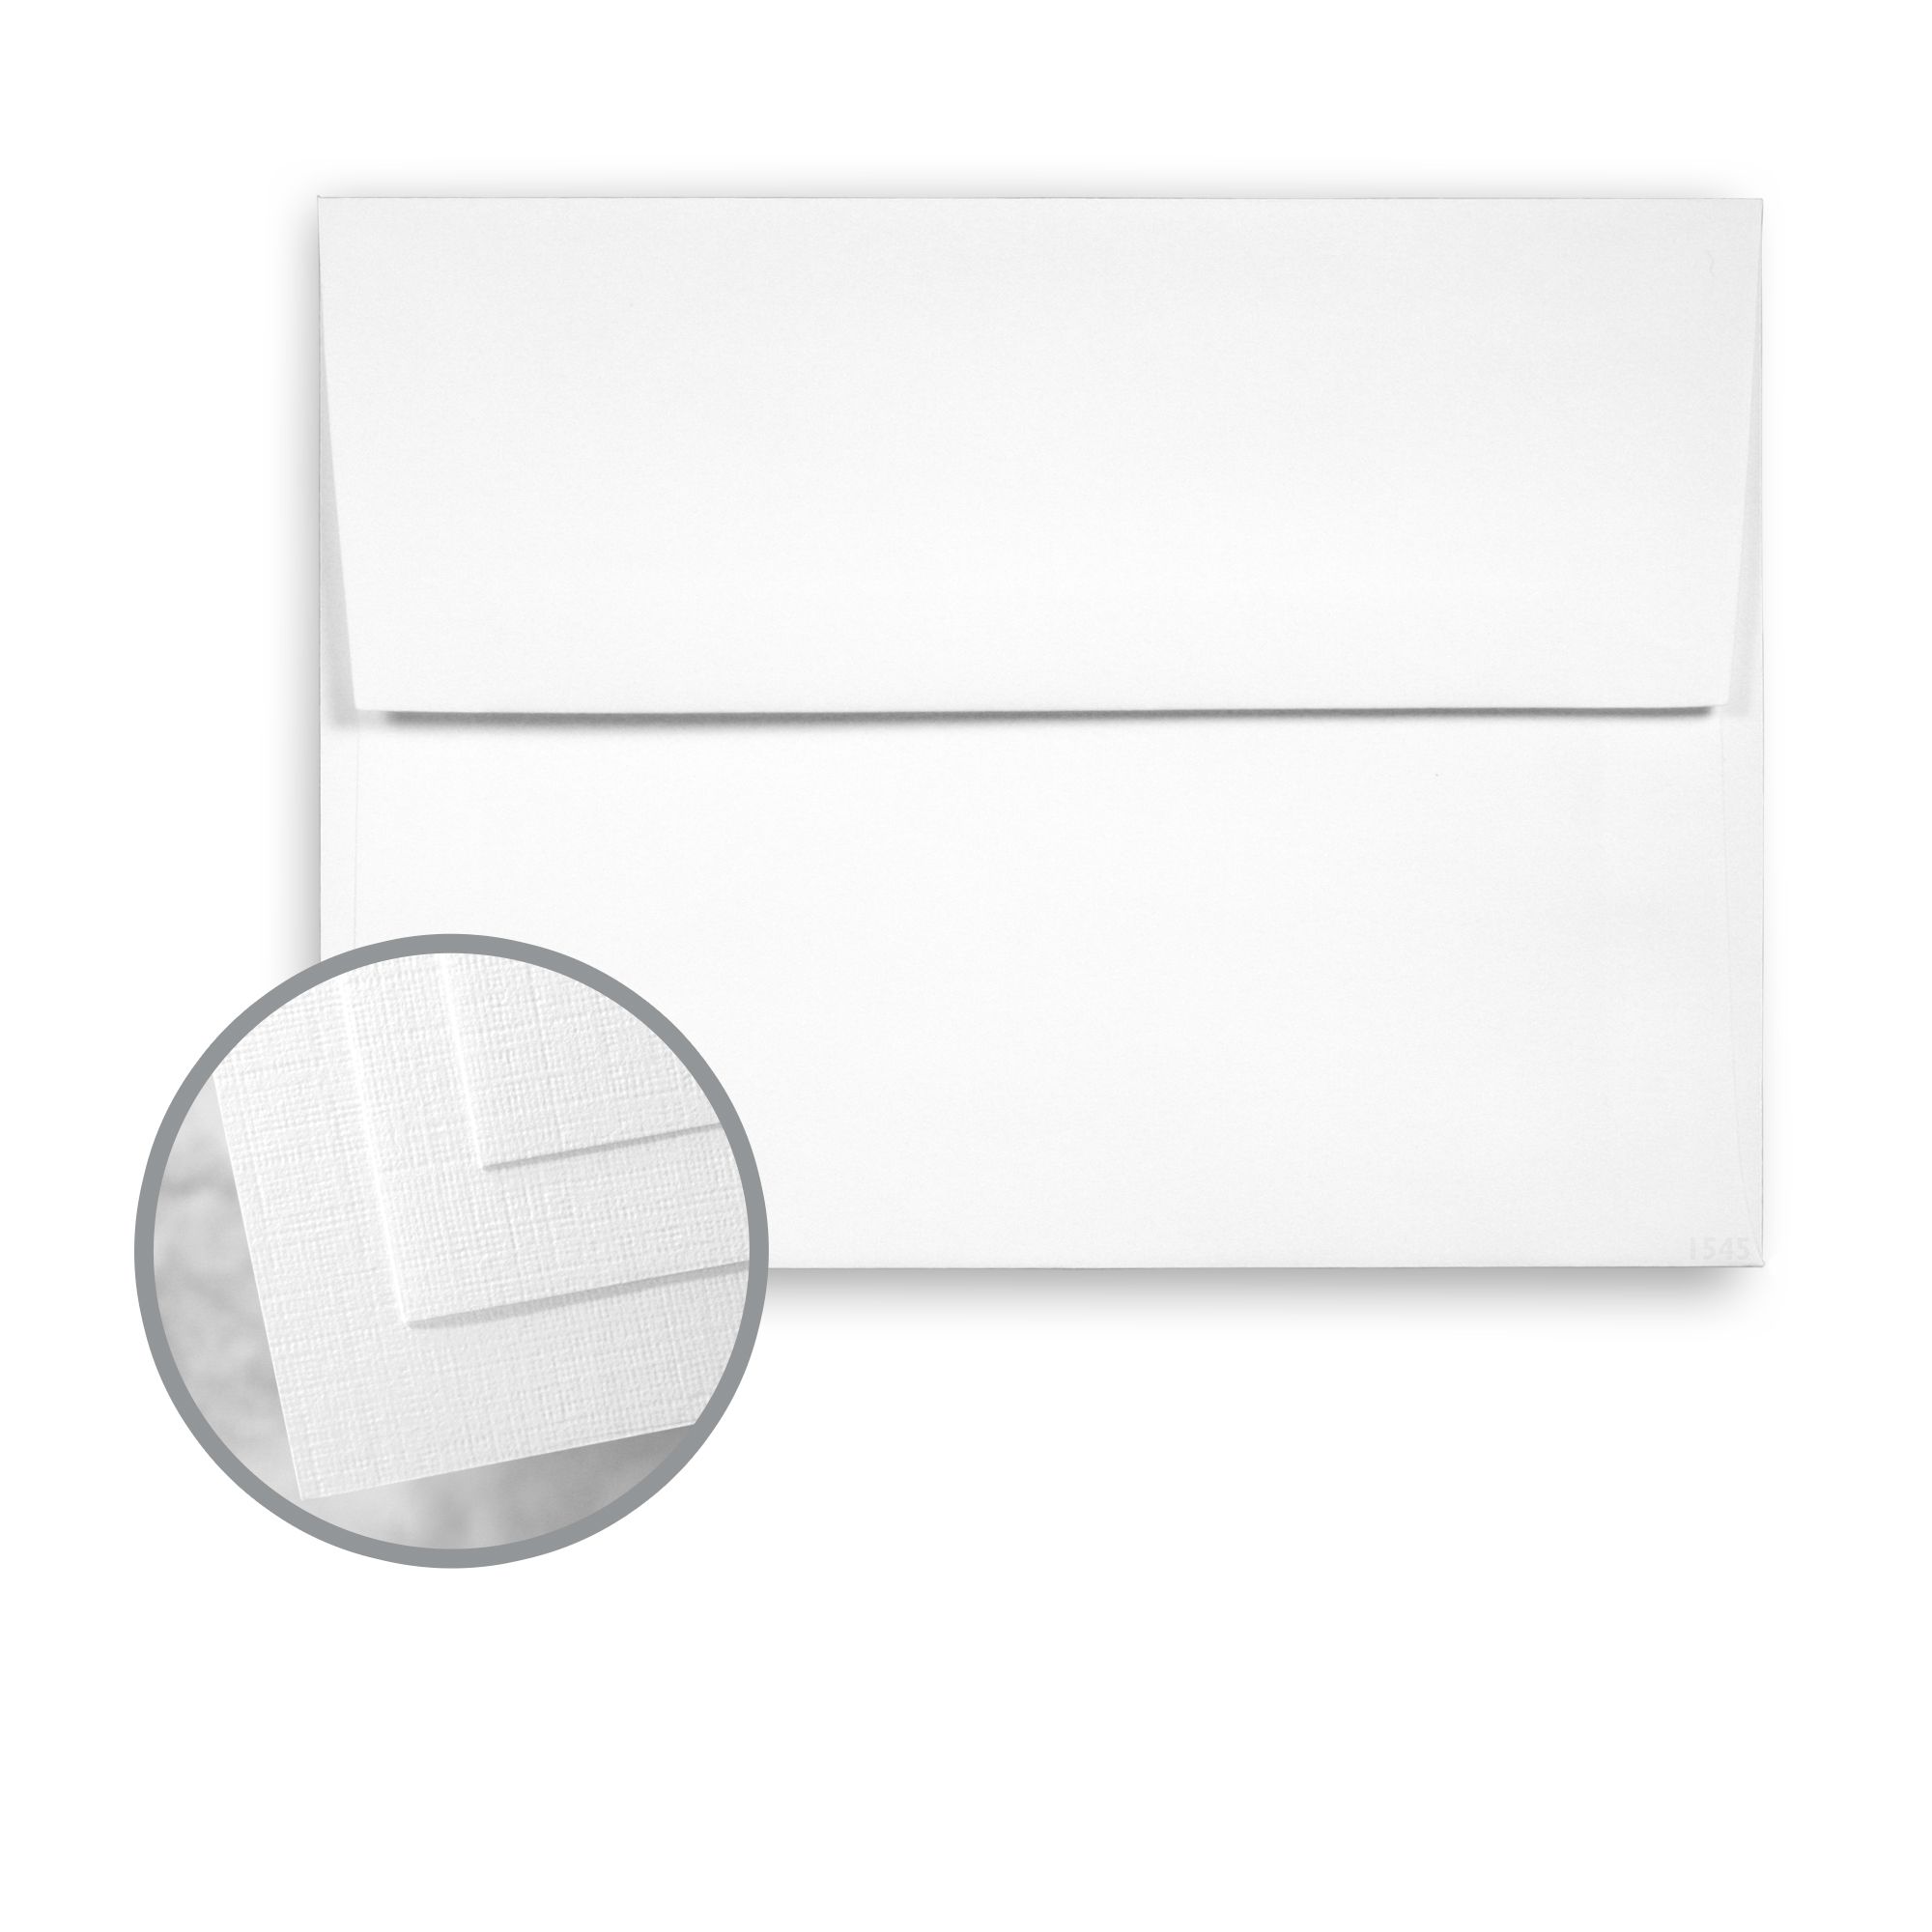 White A7 5 1/4 x 7 1/4 Square Flap 100 Envelopes Desktop Publishing Supplies Brand Envelopes Envelope 